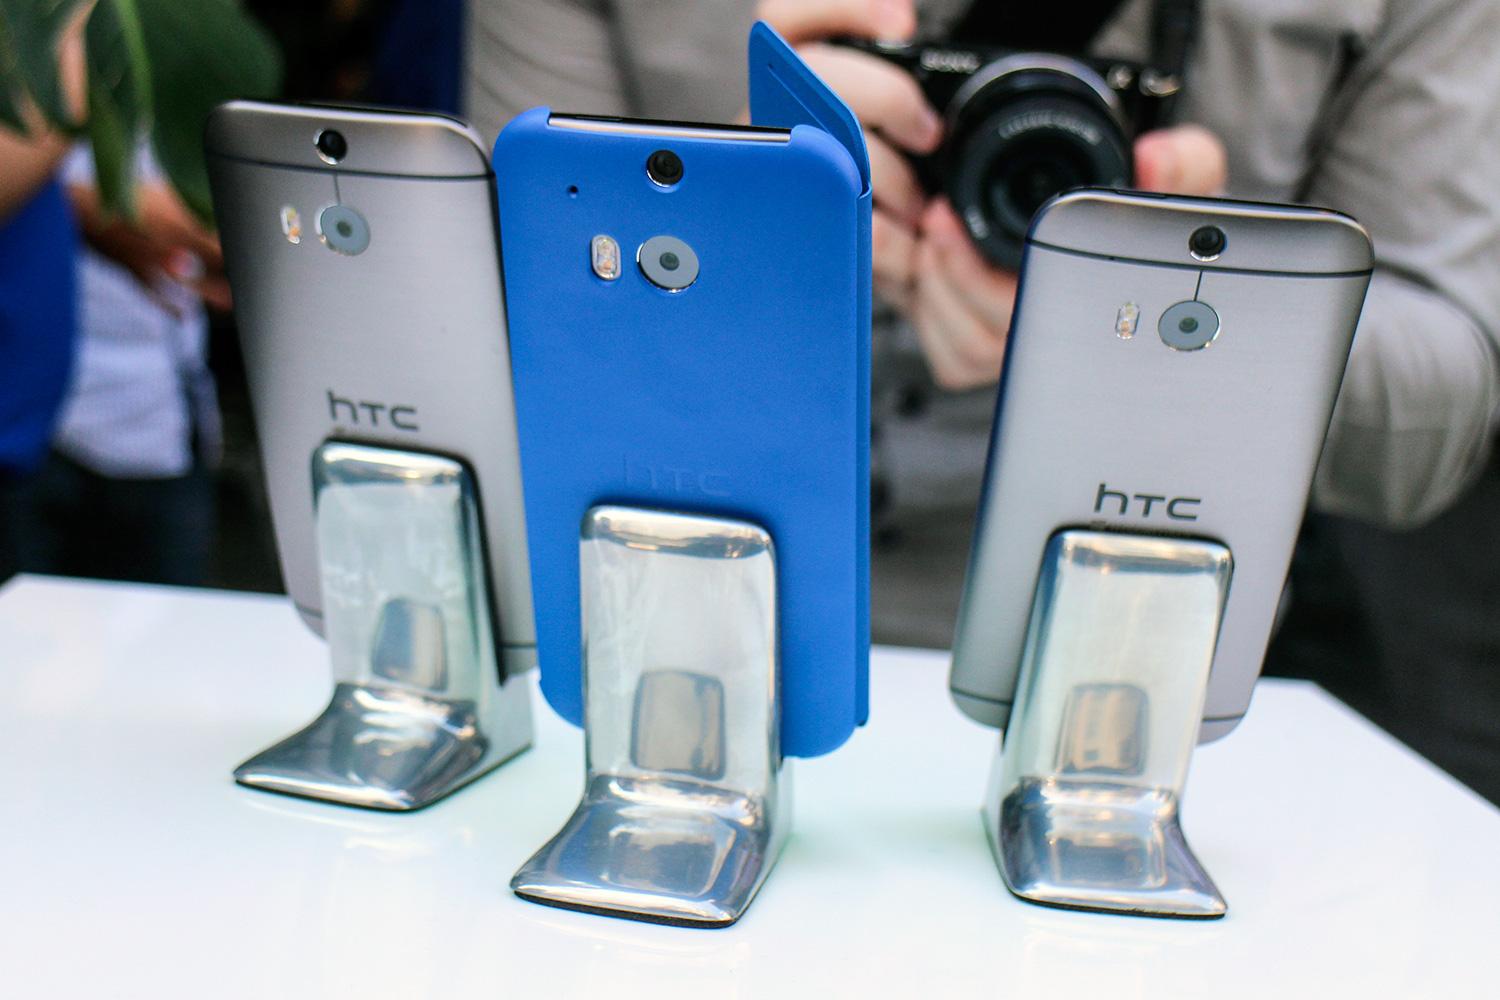 HTC One M8 with Windows